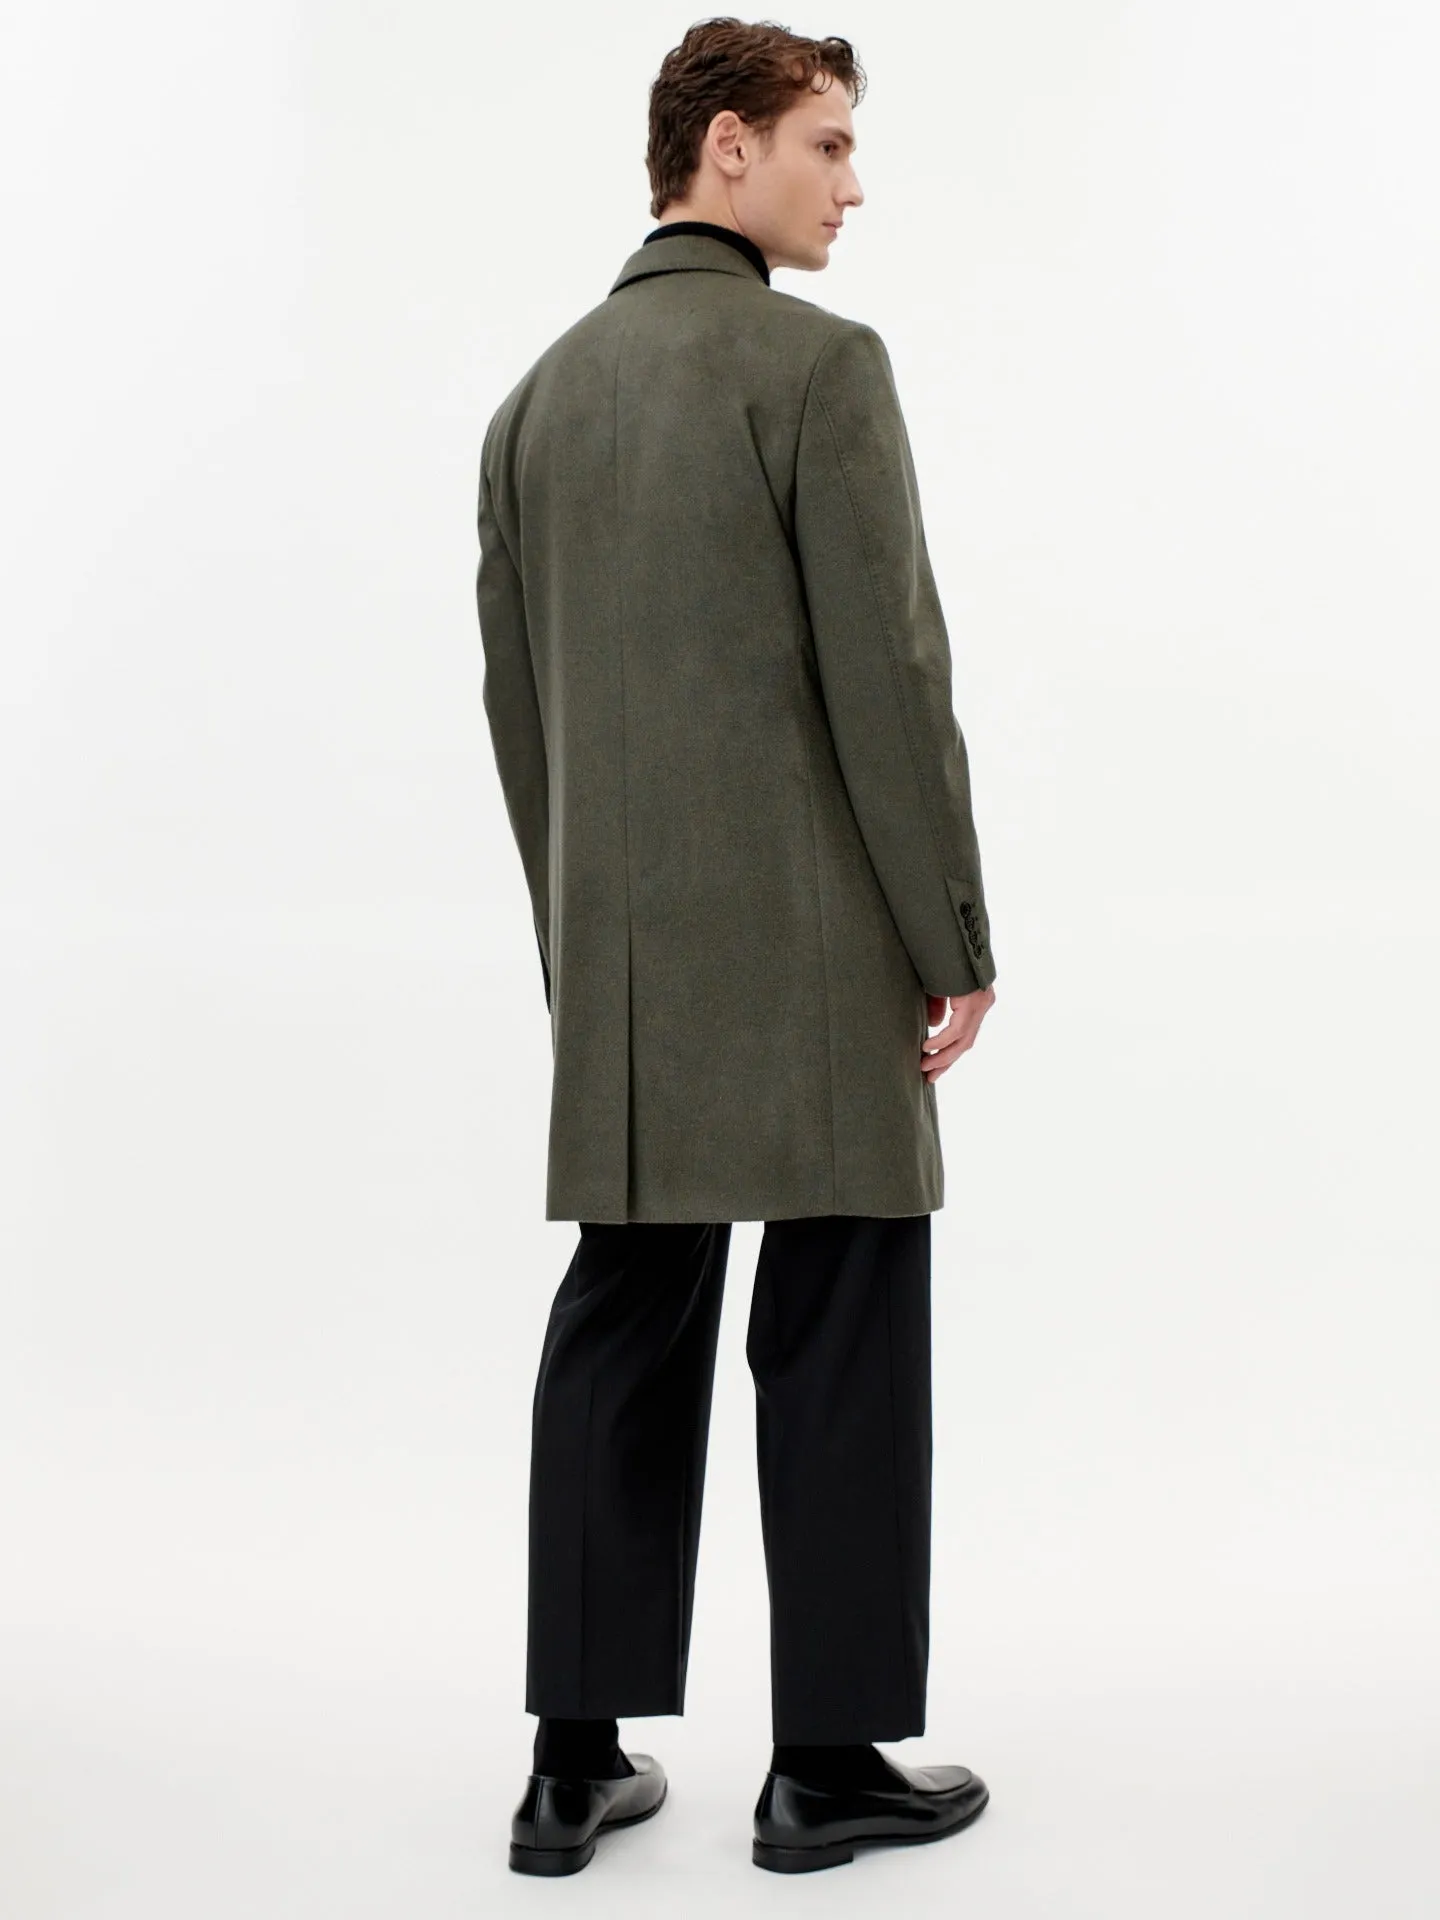 Men's Cashmere Classic Lapel Coat Green - Gobi Cashmere